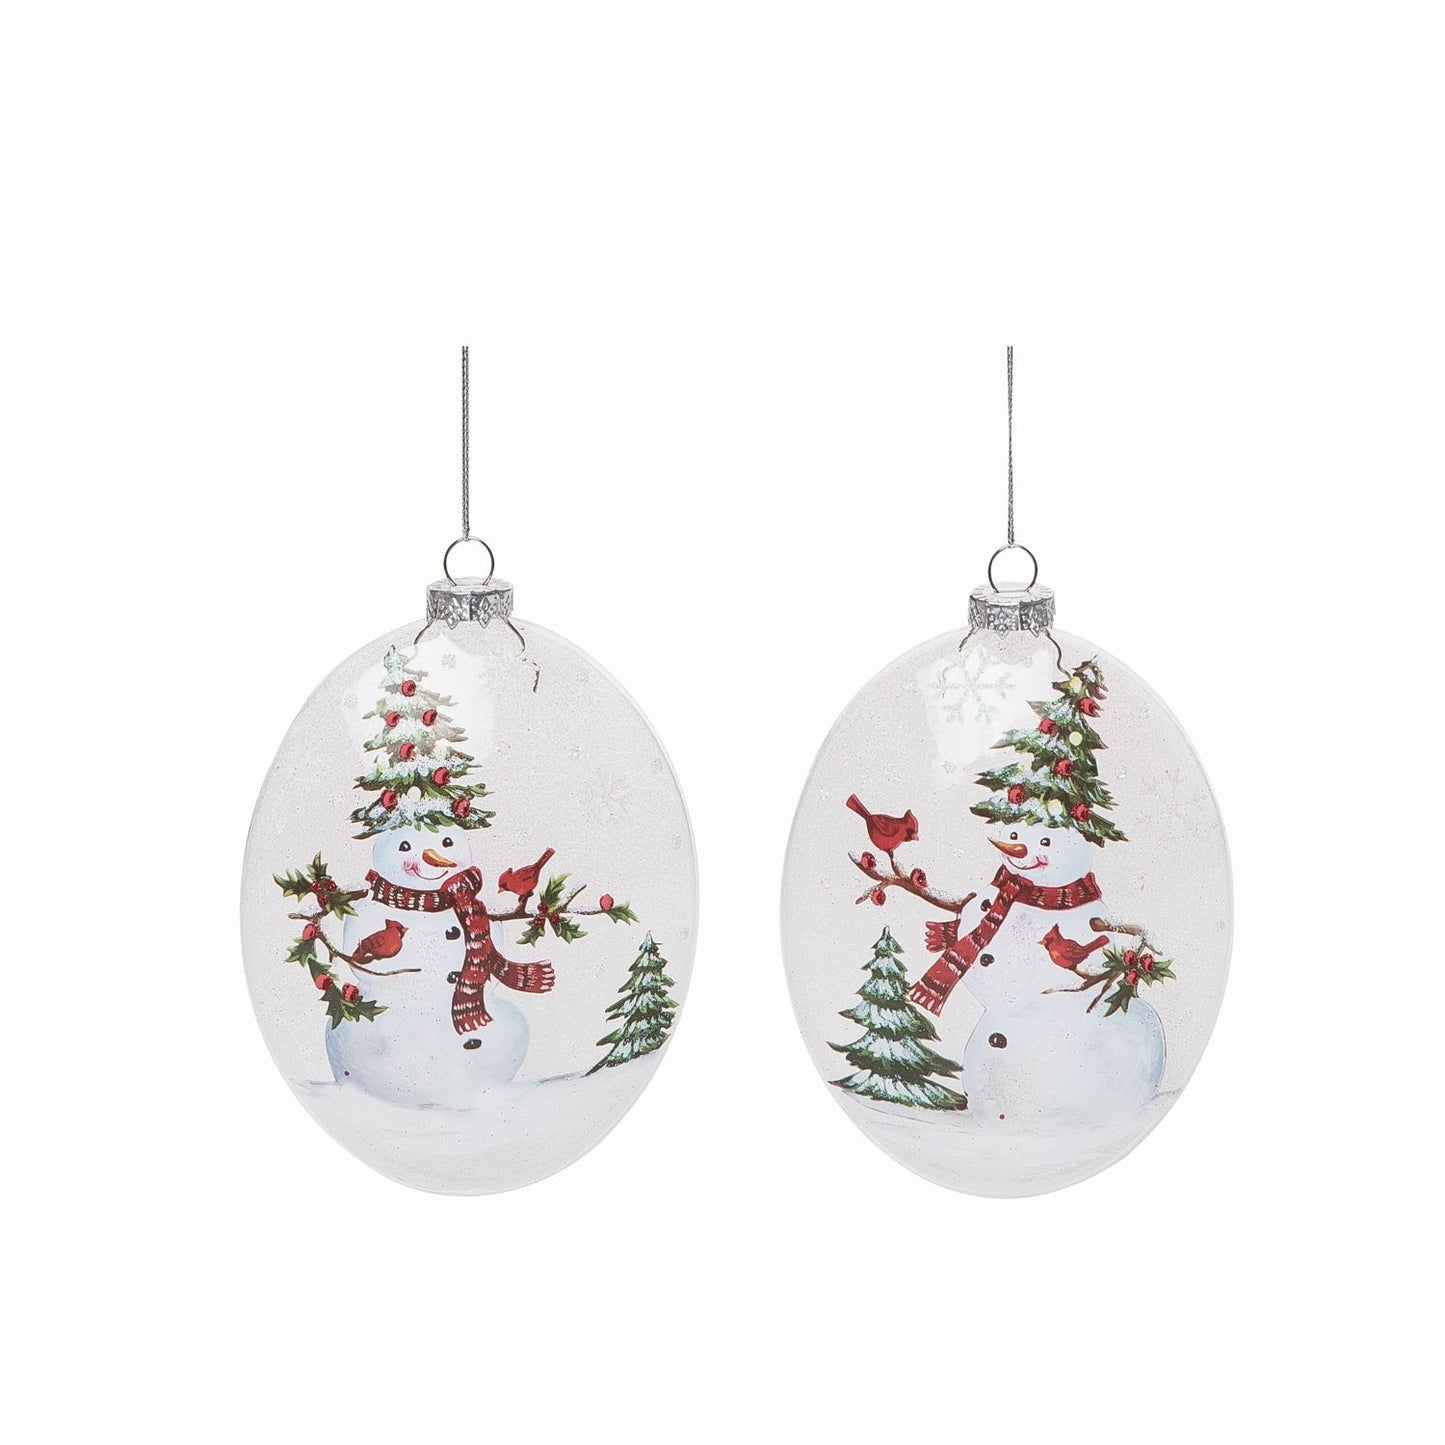 Transpac Glass Snowman With Tree Ornament, Set Of 2, Assortment